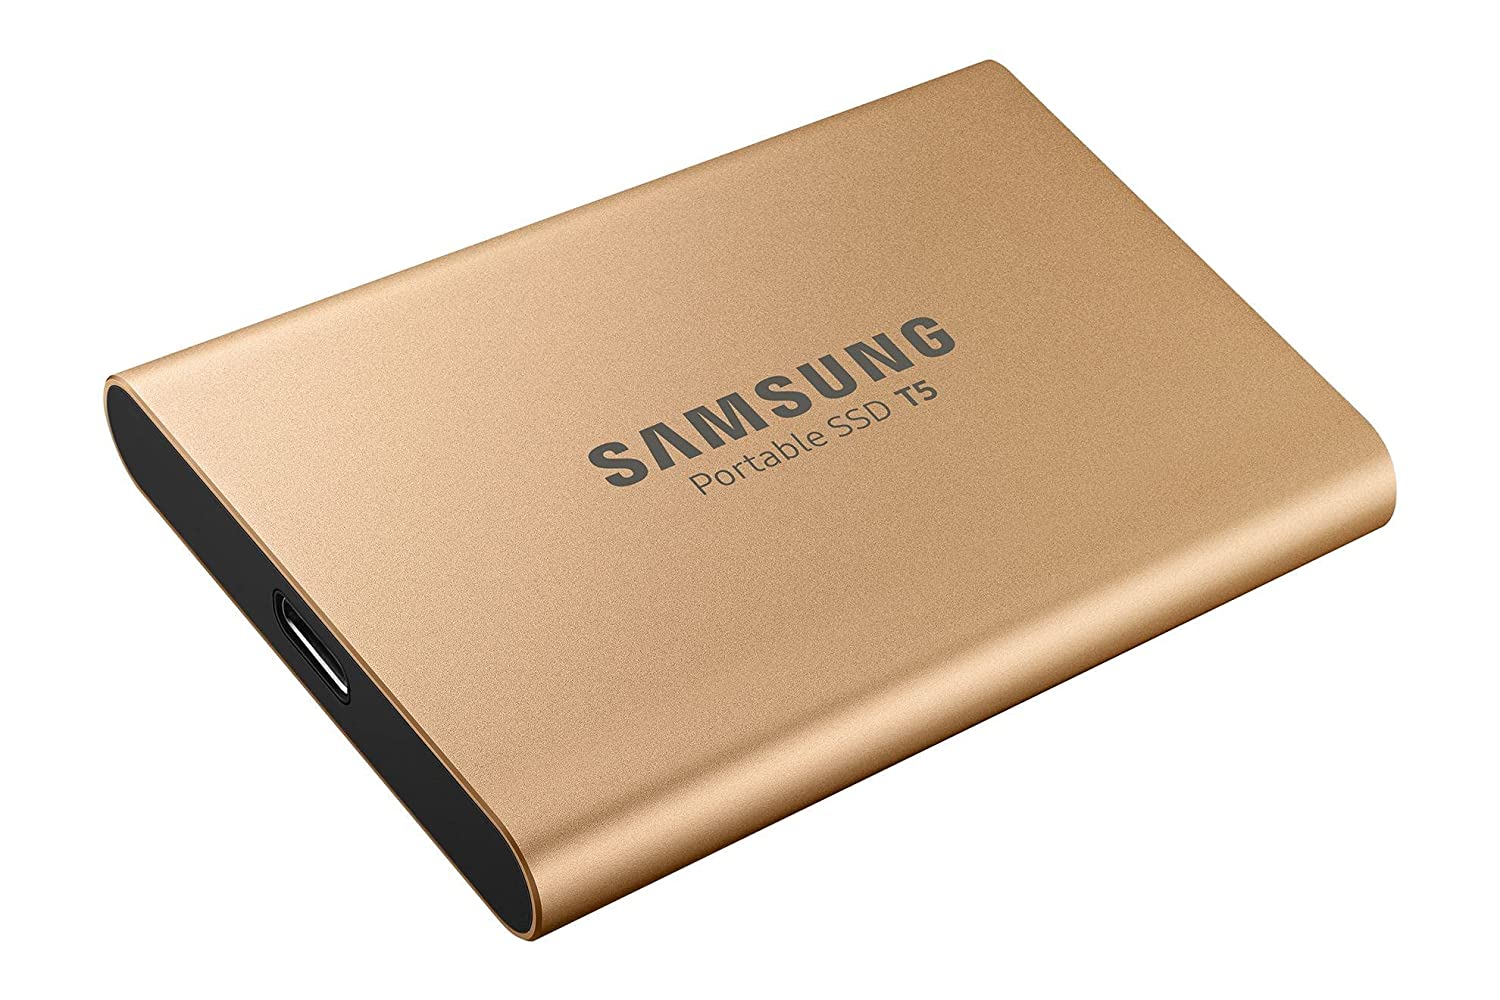 1. Samsung T5 Portable SSD